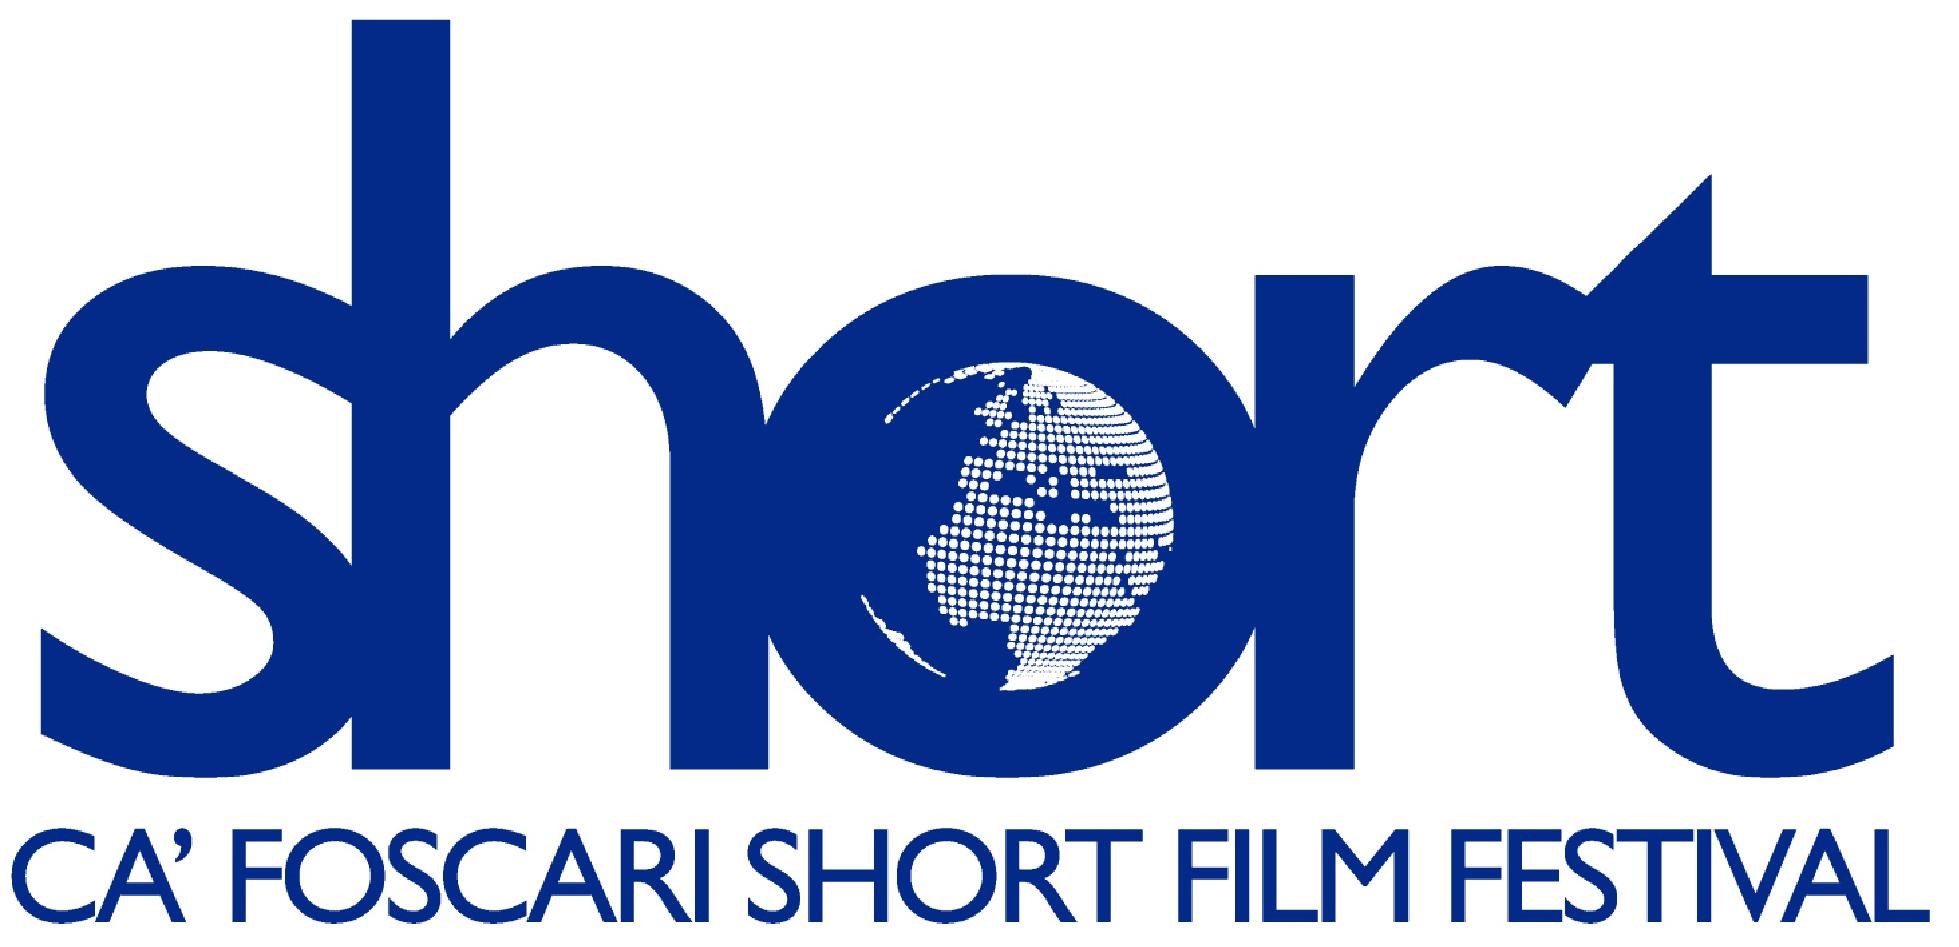 Ca' Foscari Short Film Festival